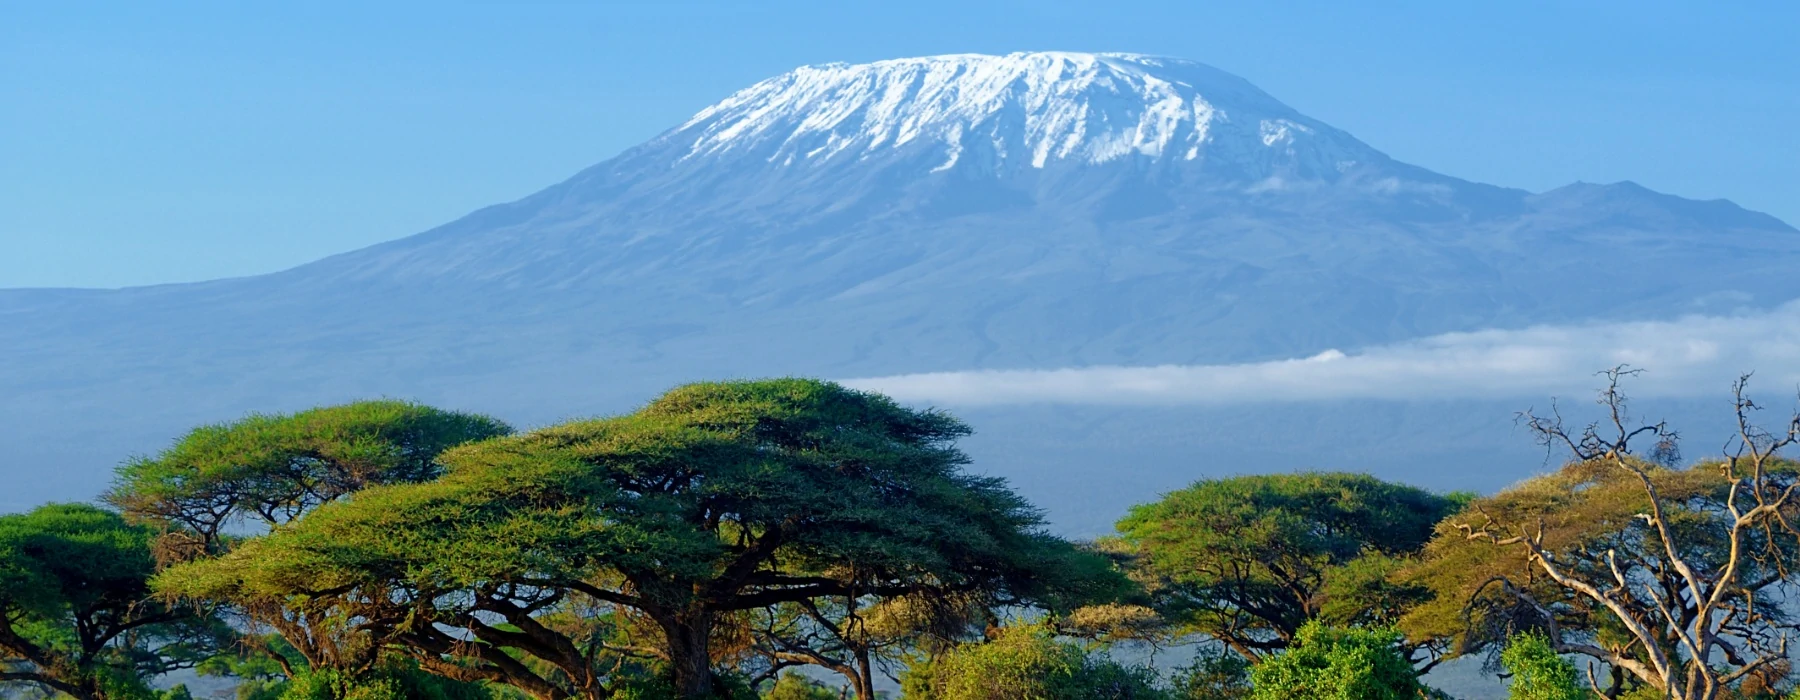 Climb Mount Kilimanjaro Rongai Route